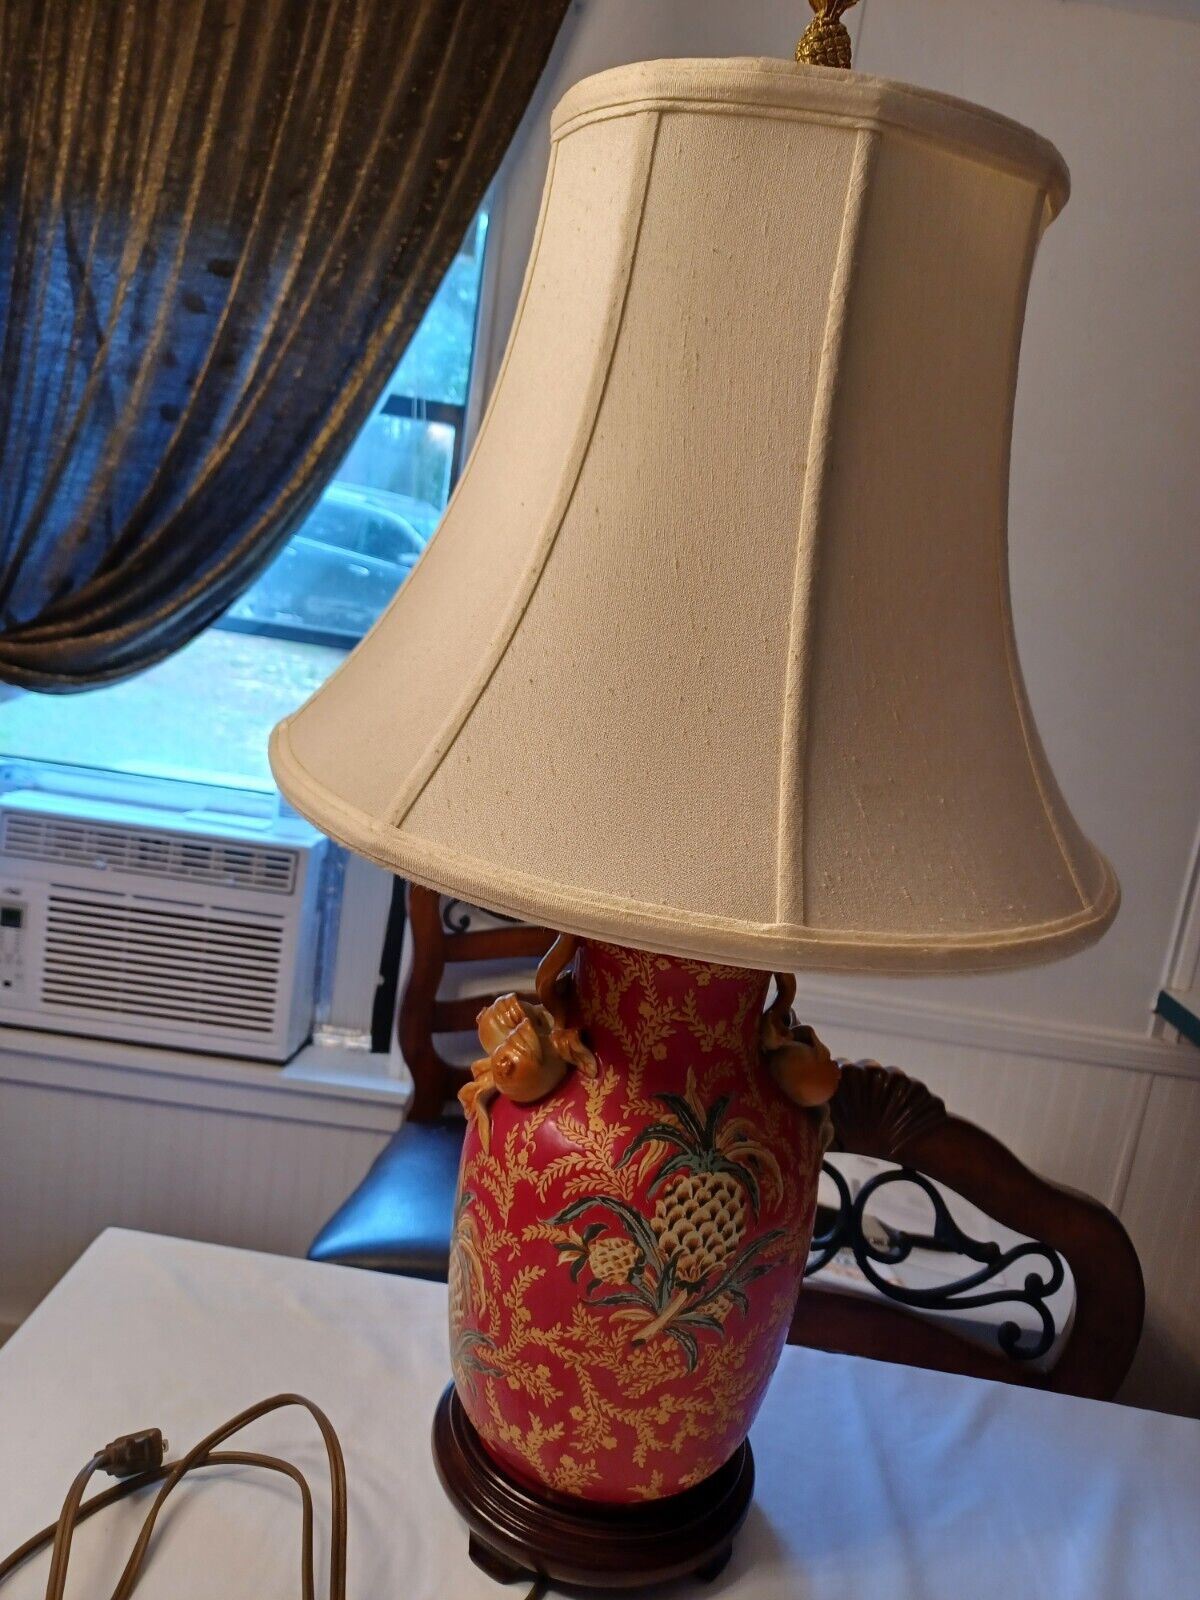 VINTAGE HAWAIIAN PINEAPPLE PERSIMMON LAMP WITH SHADE